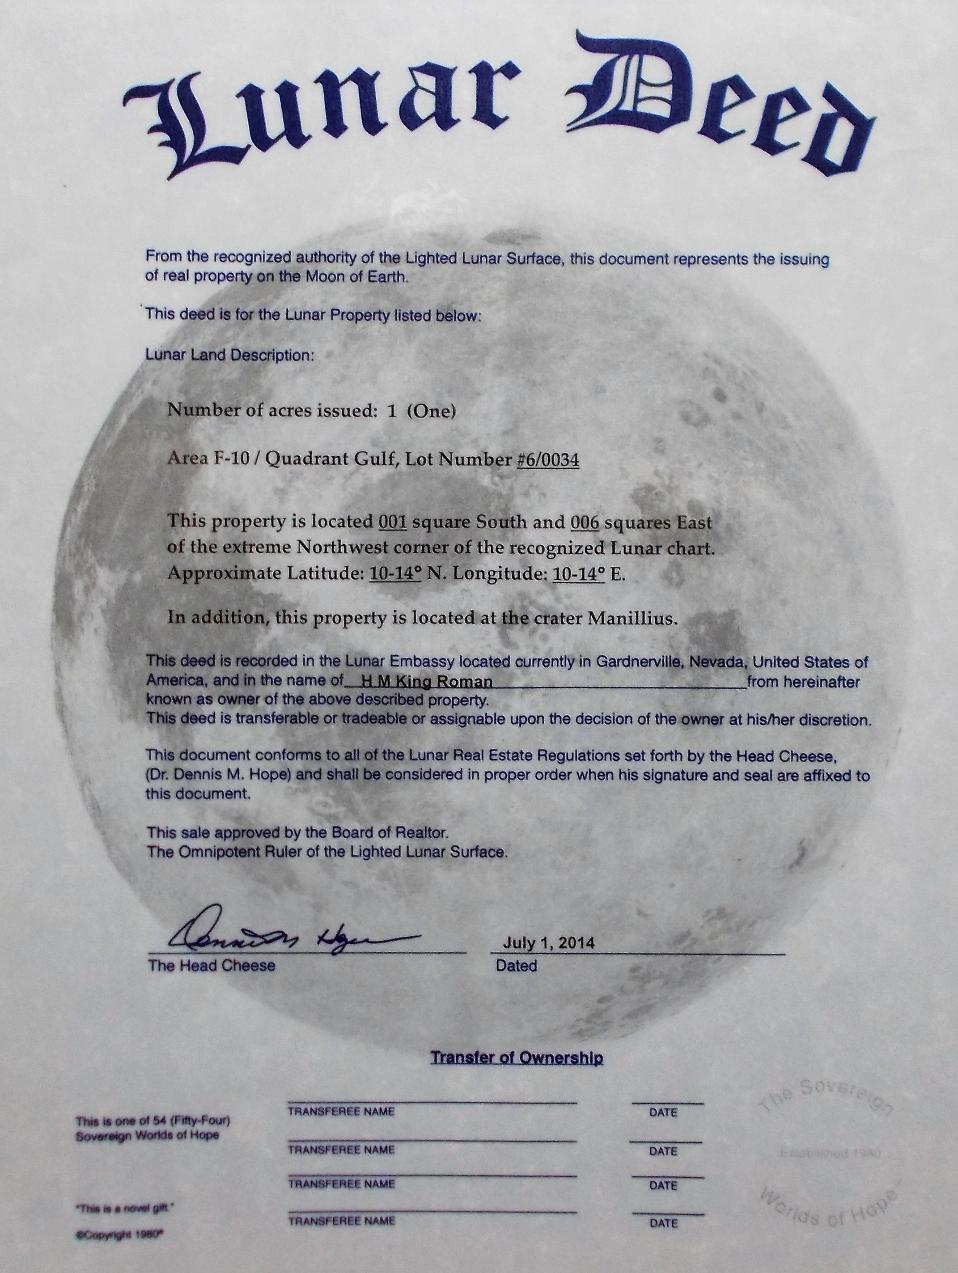 Lunar Deed for Kingdom of Alba on Copernicus